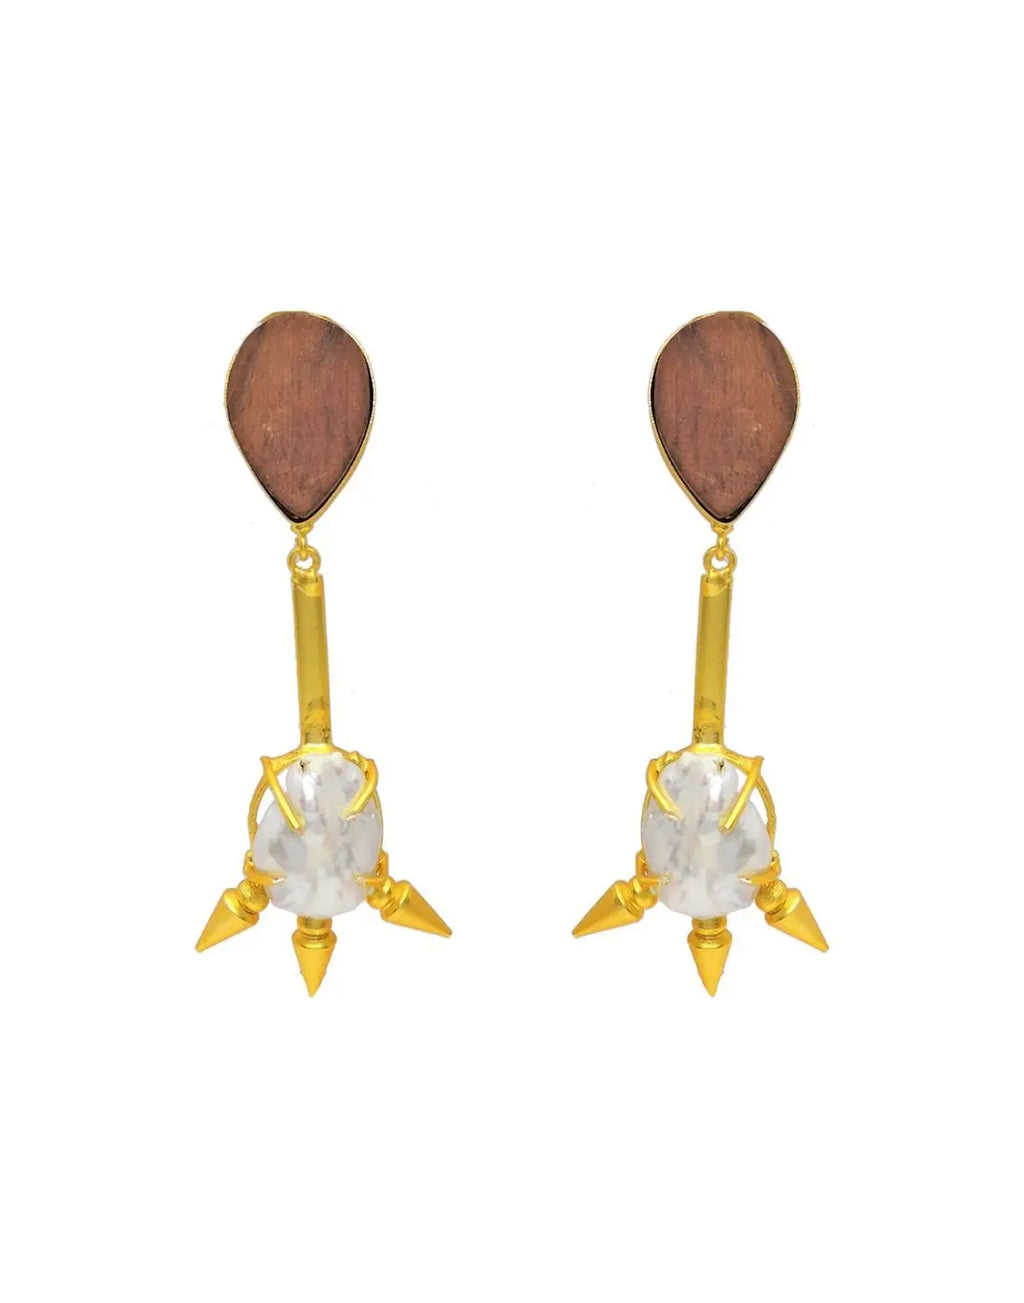 Wood Spike Earrings- Handcrafted Jewellery from Dori